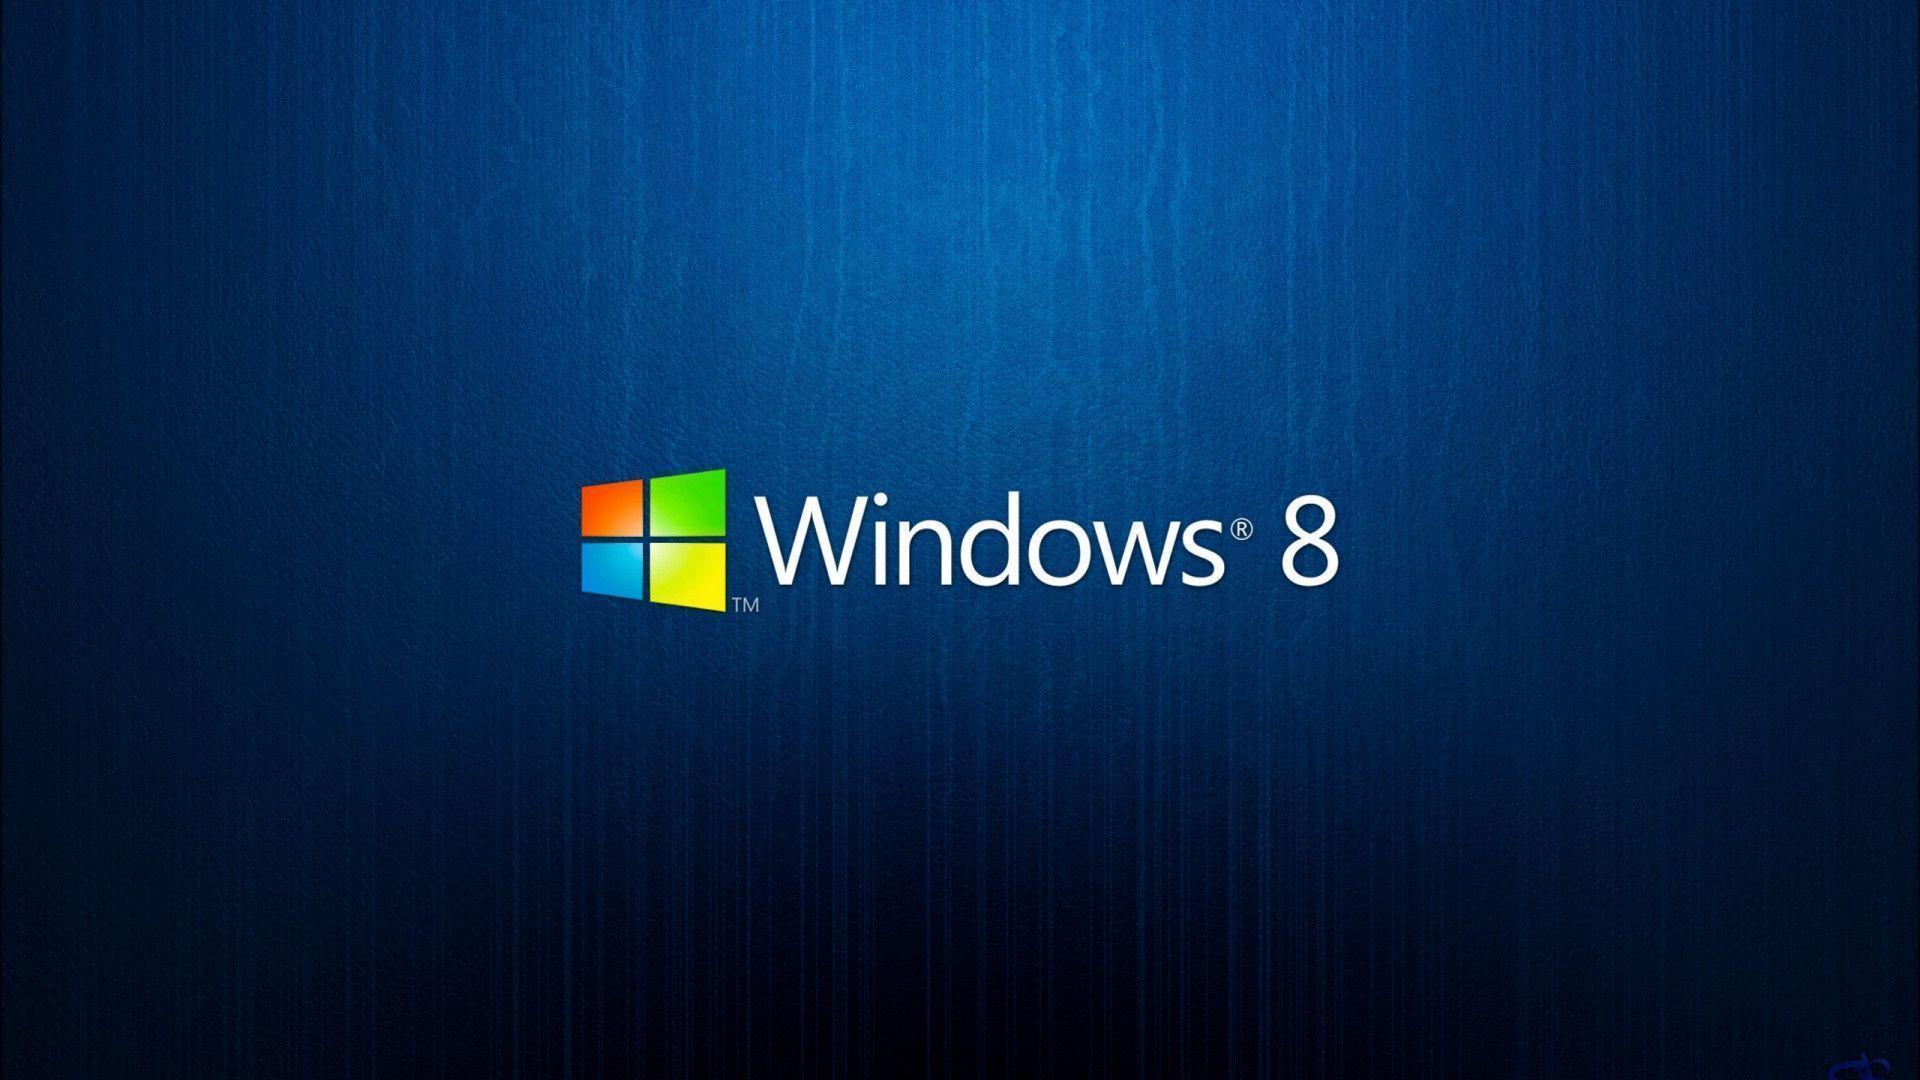 Windows 8 Wallpaper 1920x1080